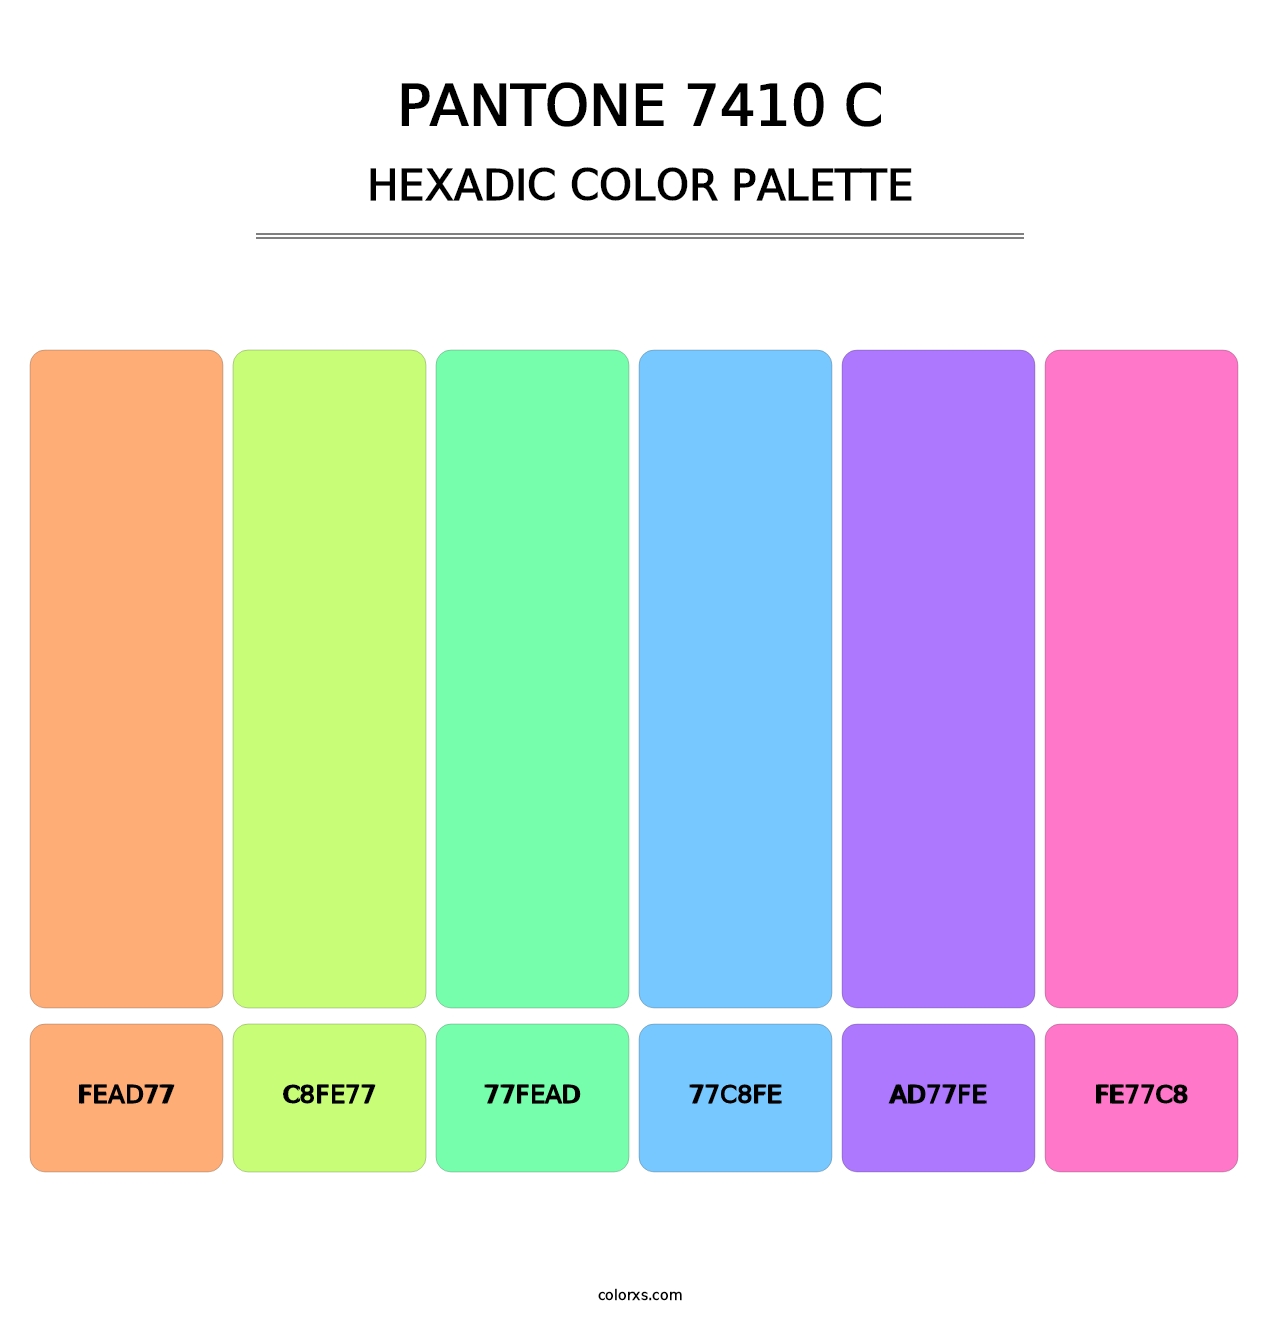 PANTONE 7410 C - Hexadic Color Palette